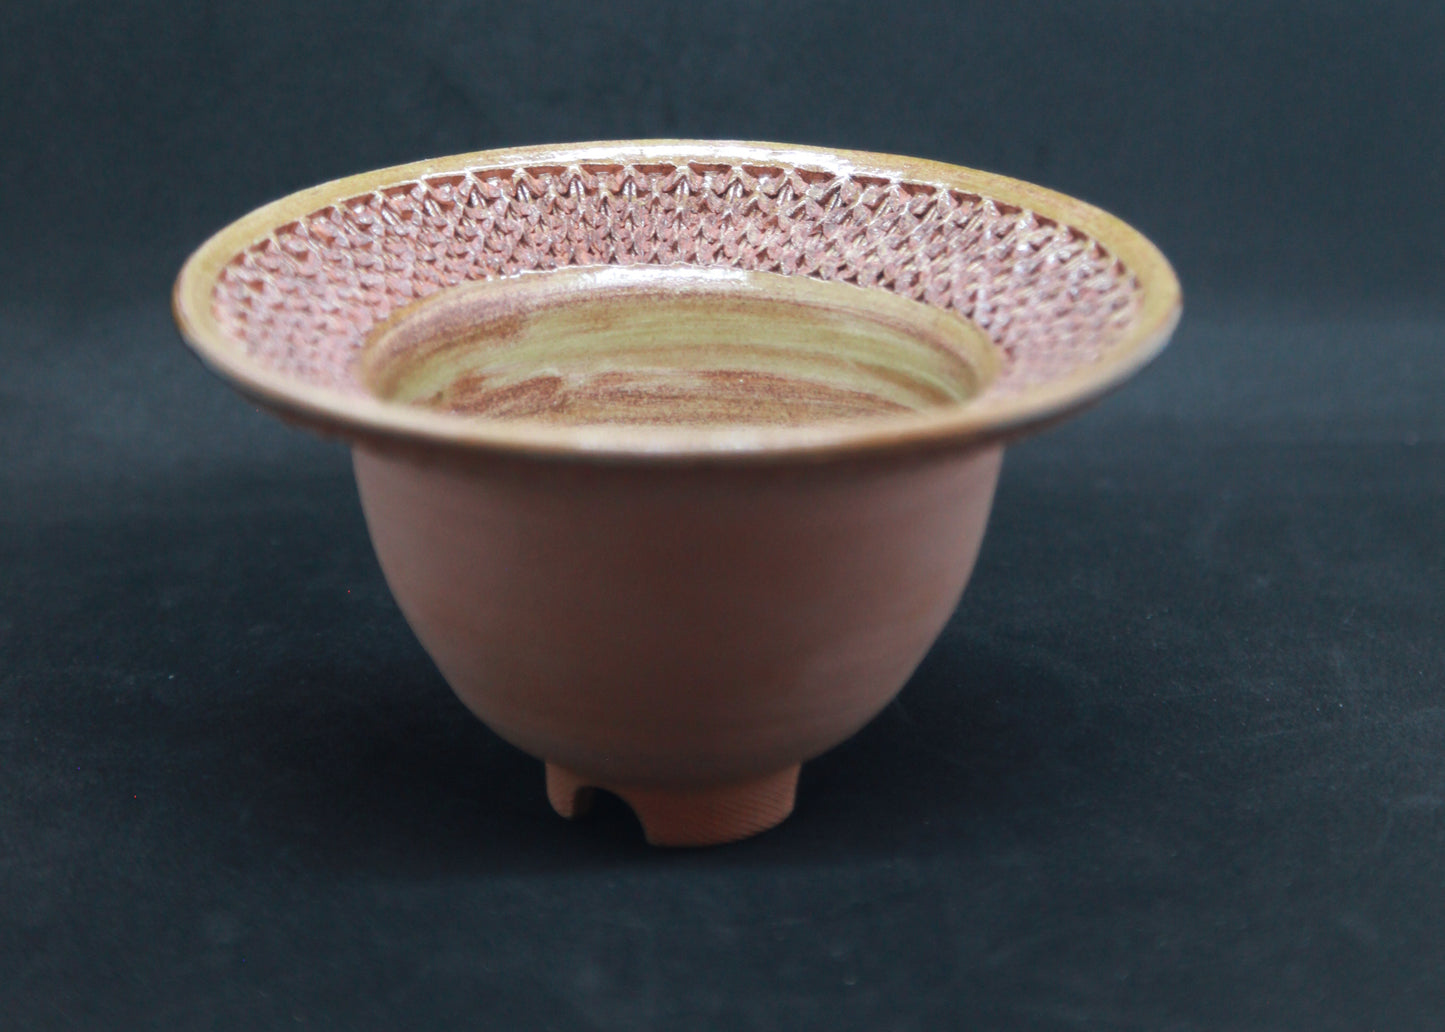 Green marli bowl on red glaze - braiding pattern